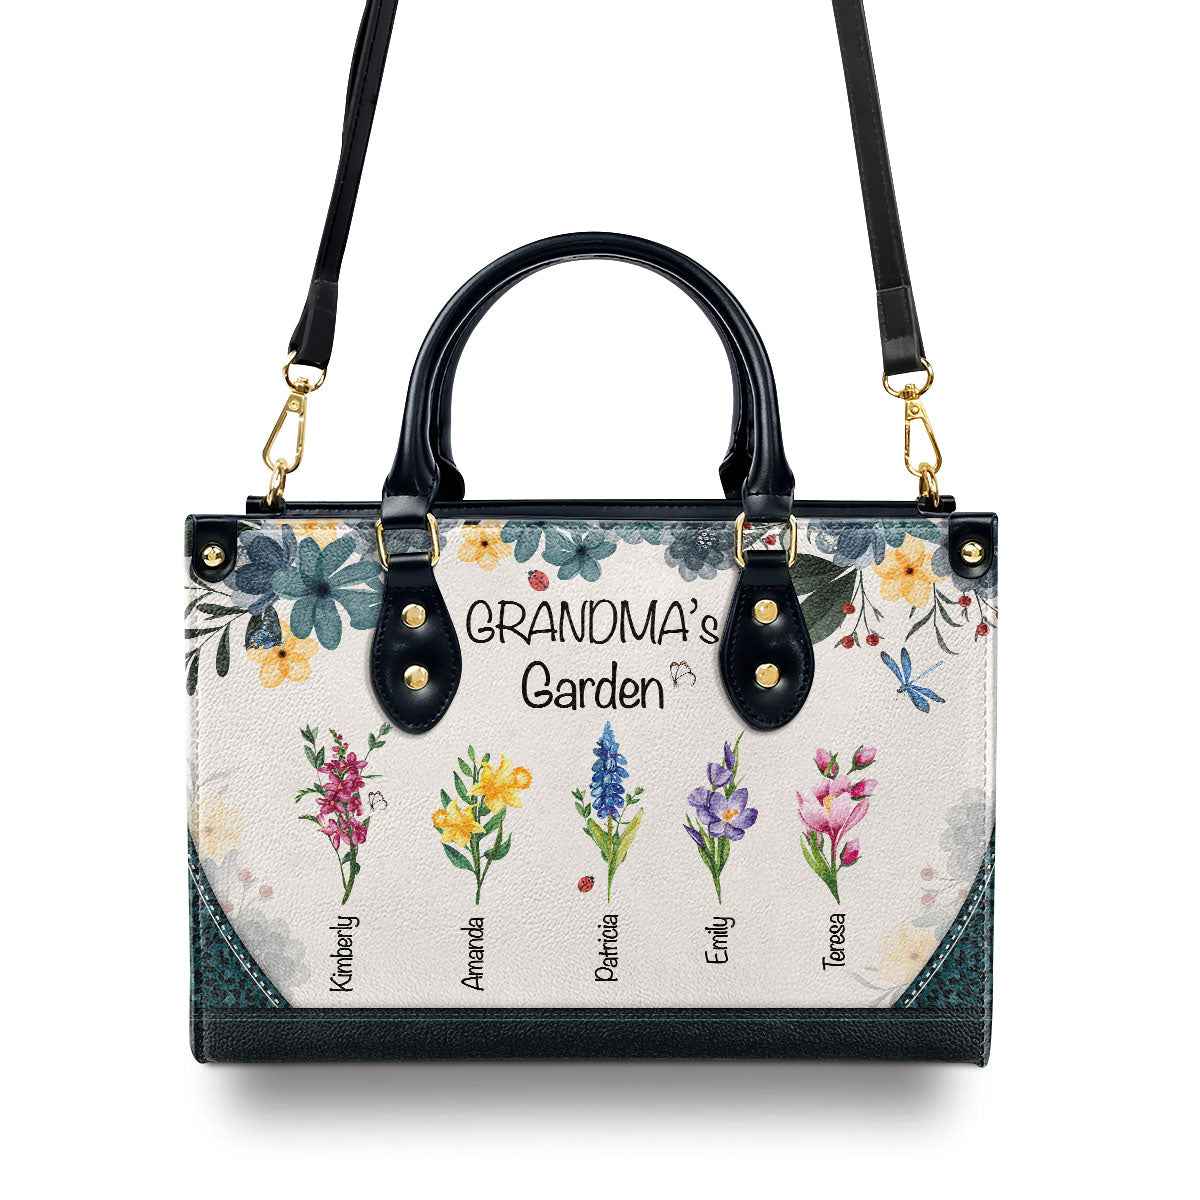 Grandma's Garden - Personalized Leather Handbag SB553